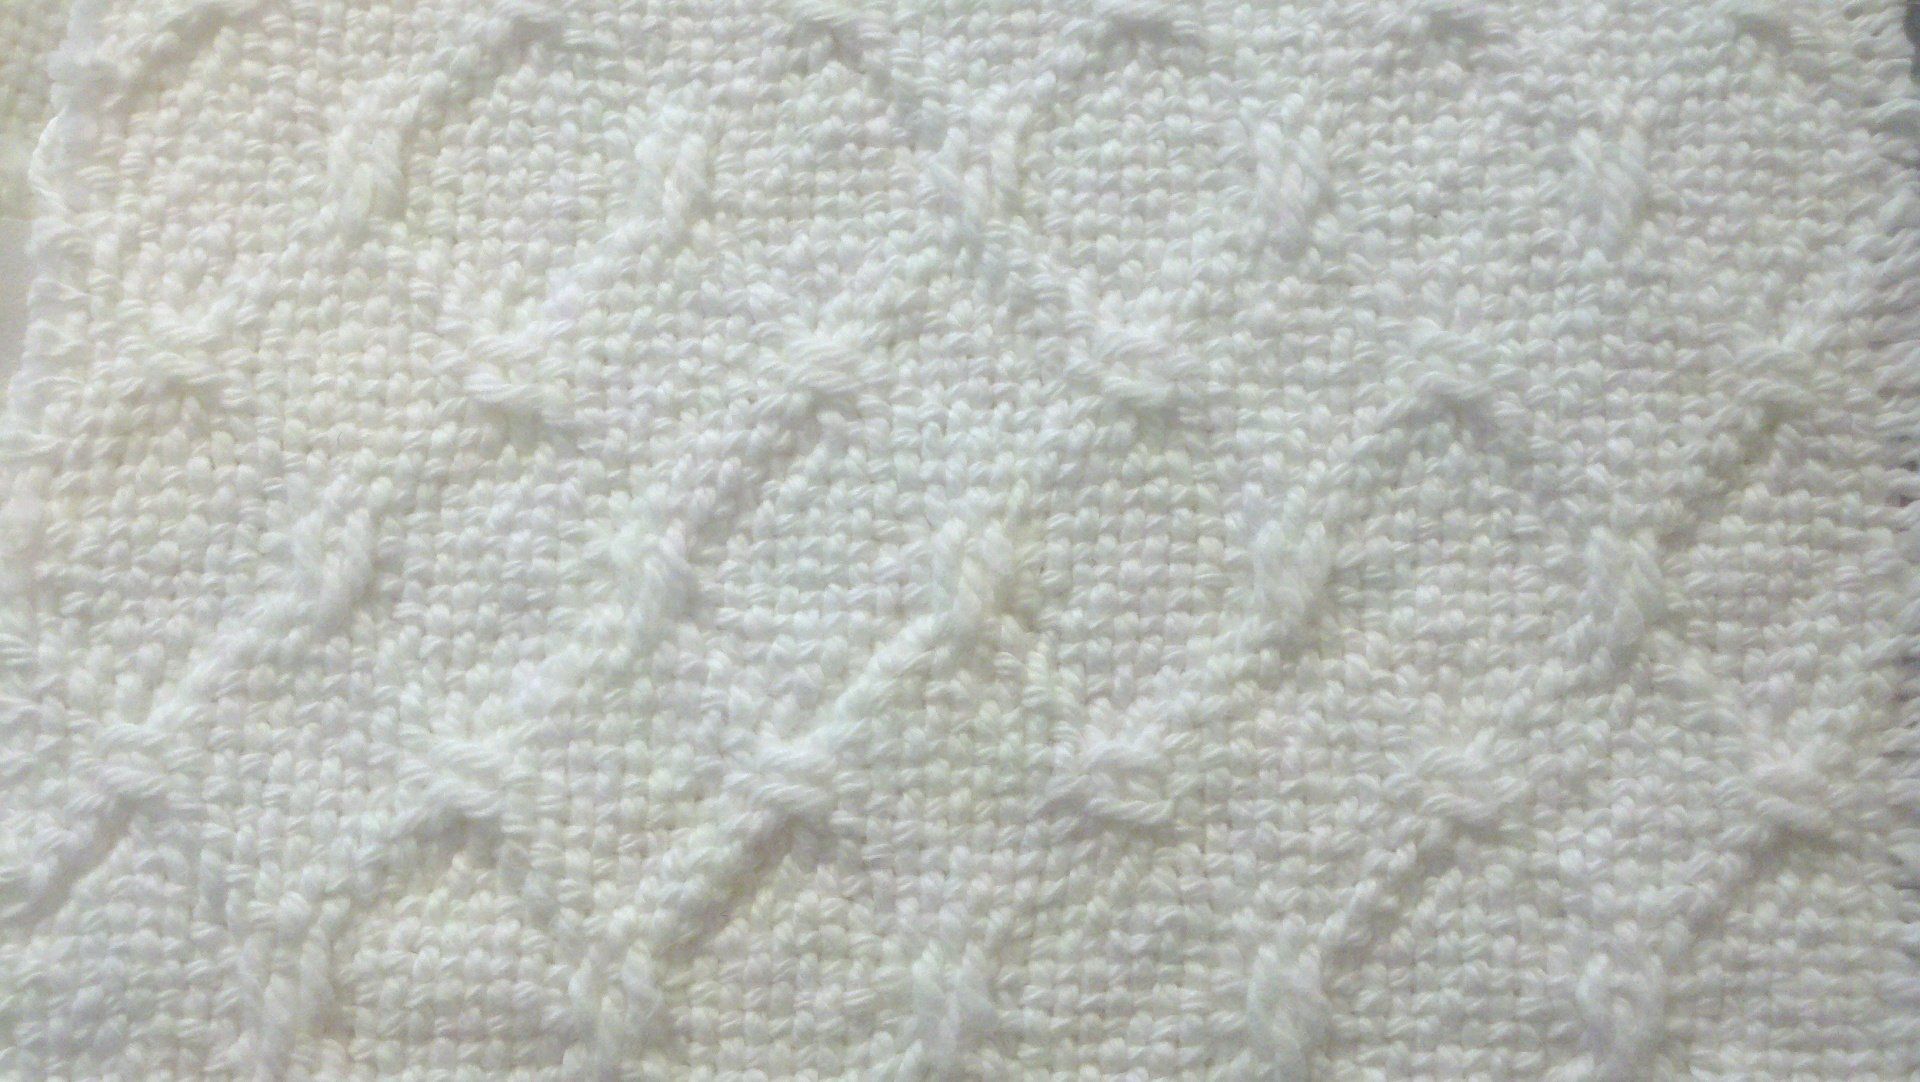 Cream Patterned Blanket, in New York, NY